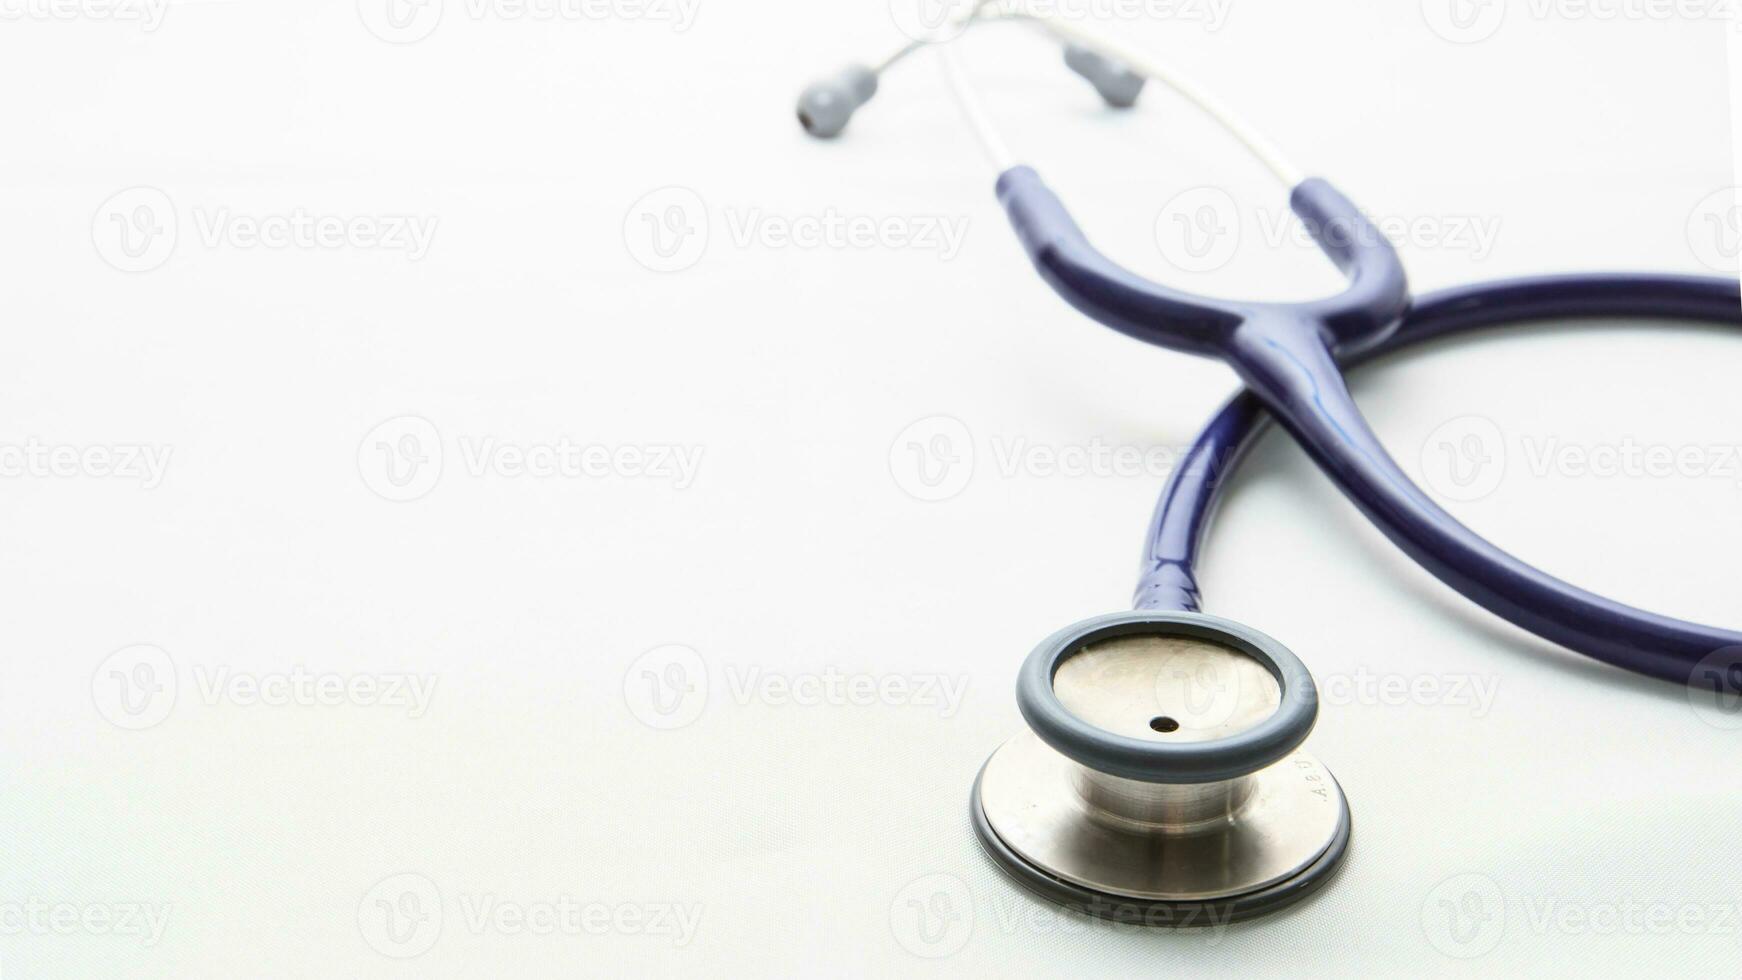 Isolated Stethoscope on White Background, Medical Equipment Concept photo